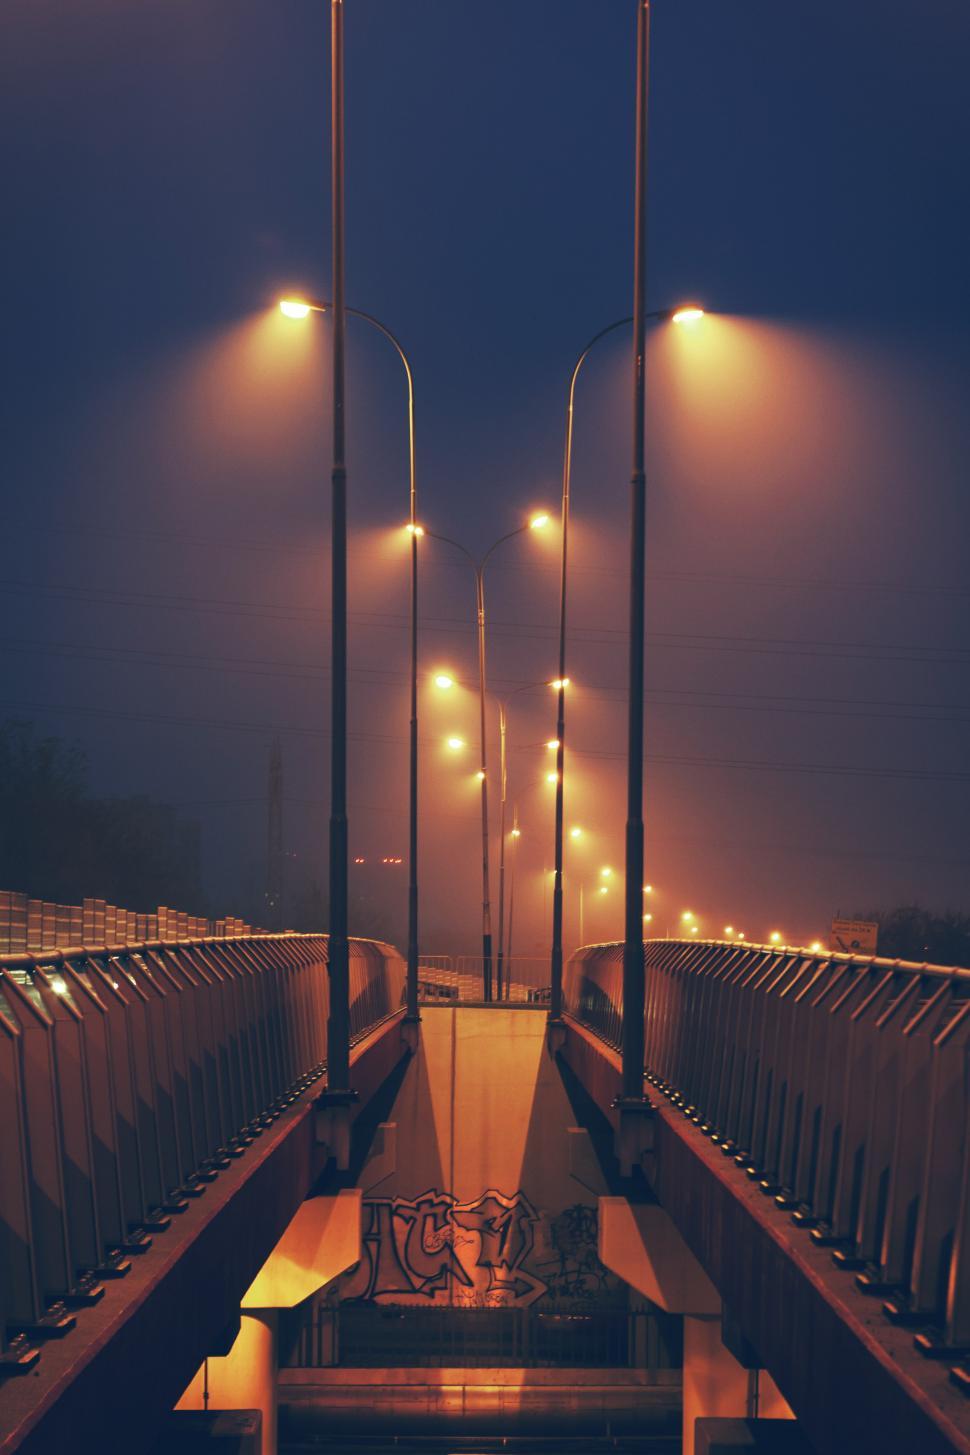 Free Image of Long Bridge With Street Lights on a Foggy Night 